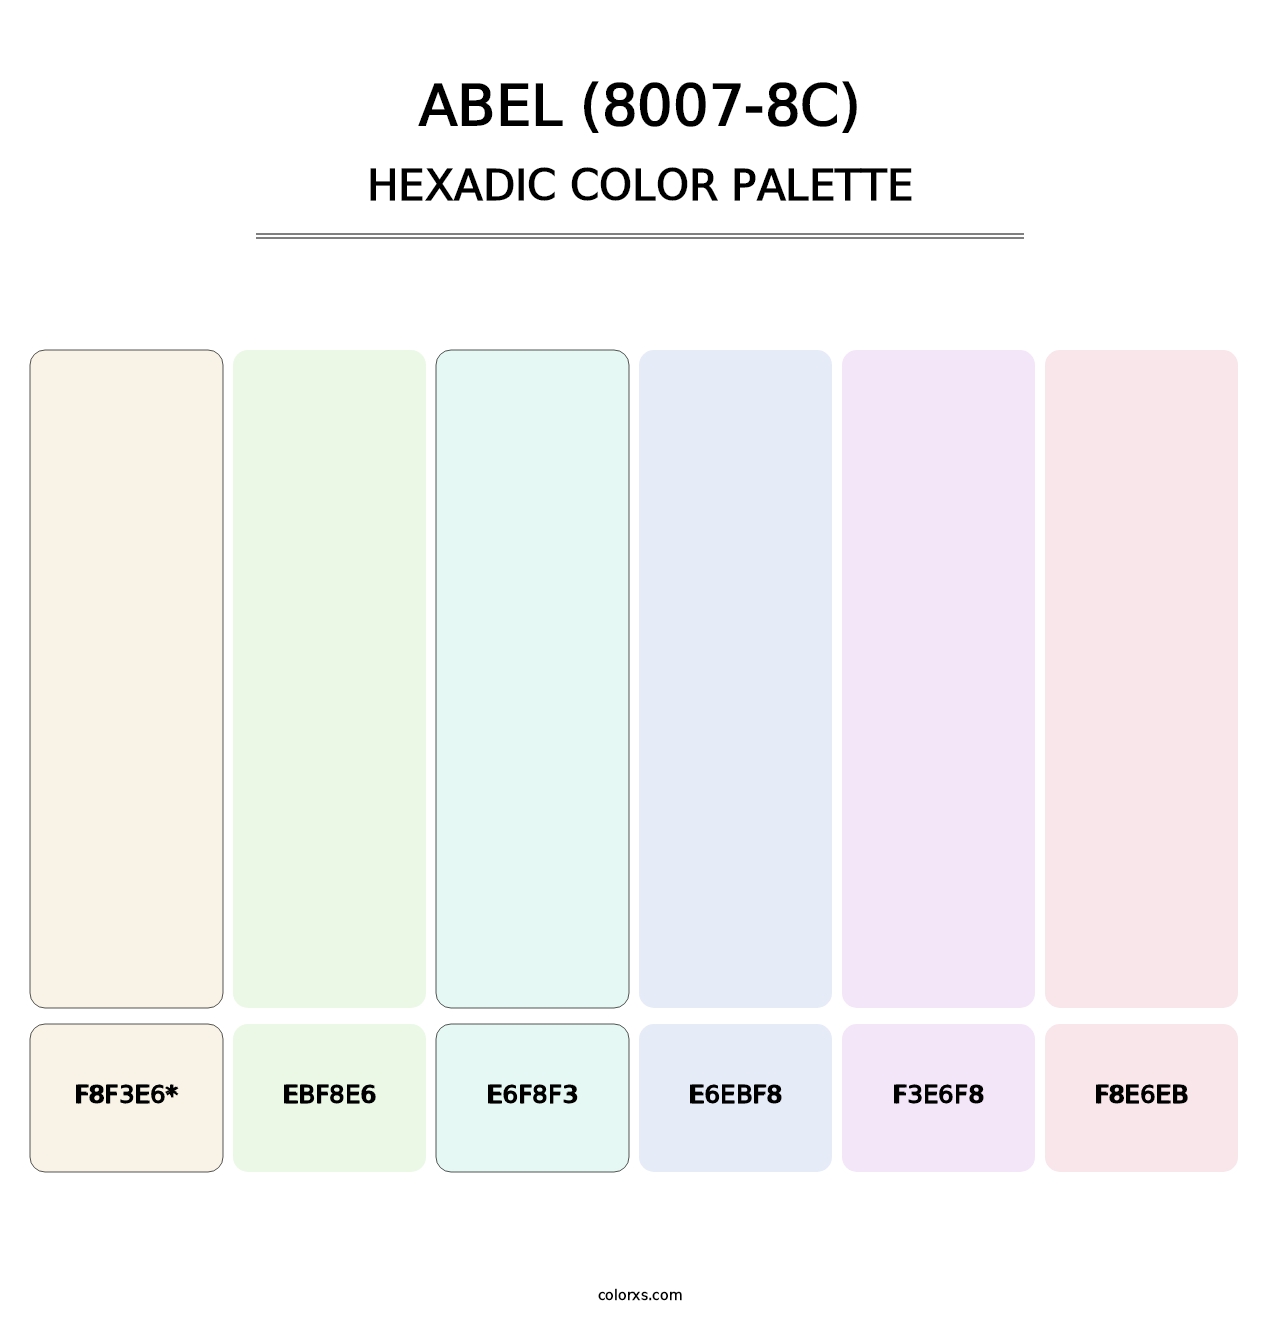 Abel (8007-8C) - Hexadic Color Palette